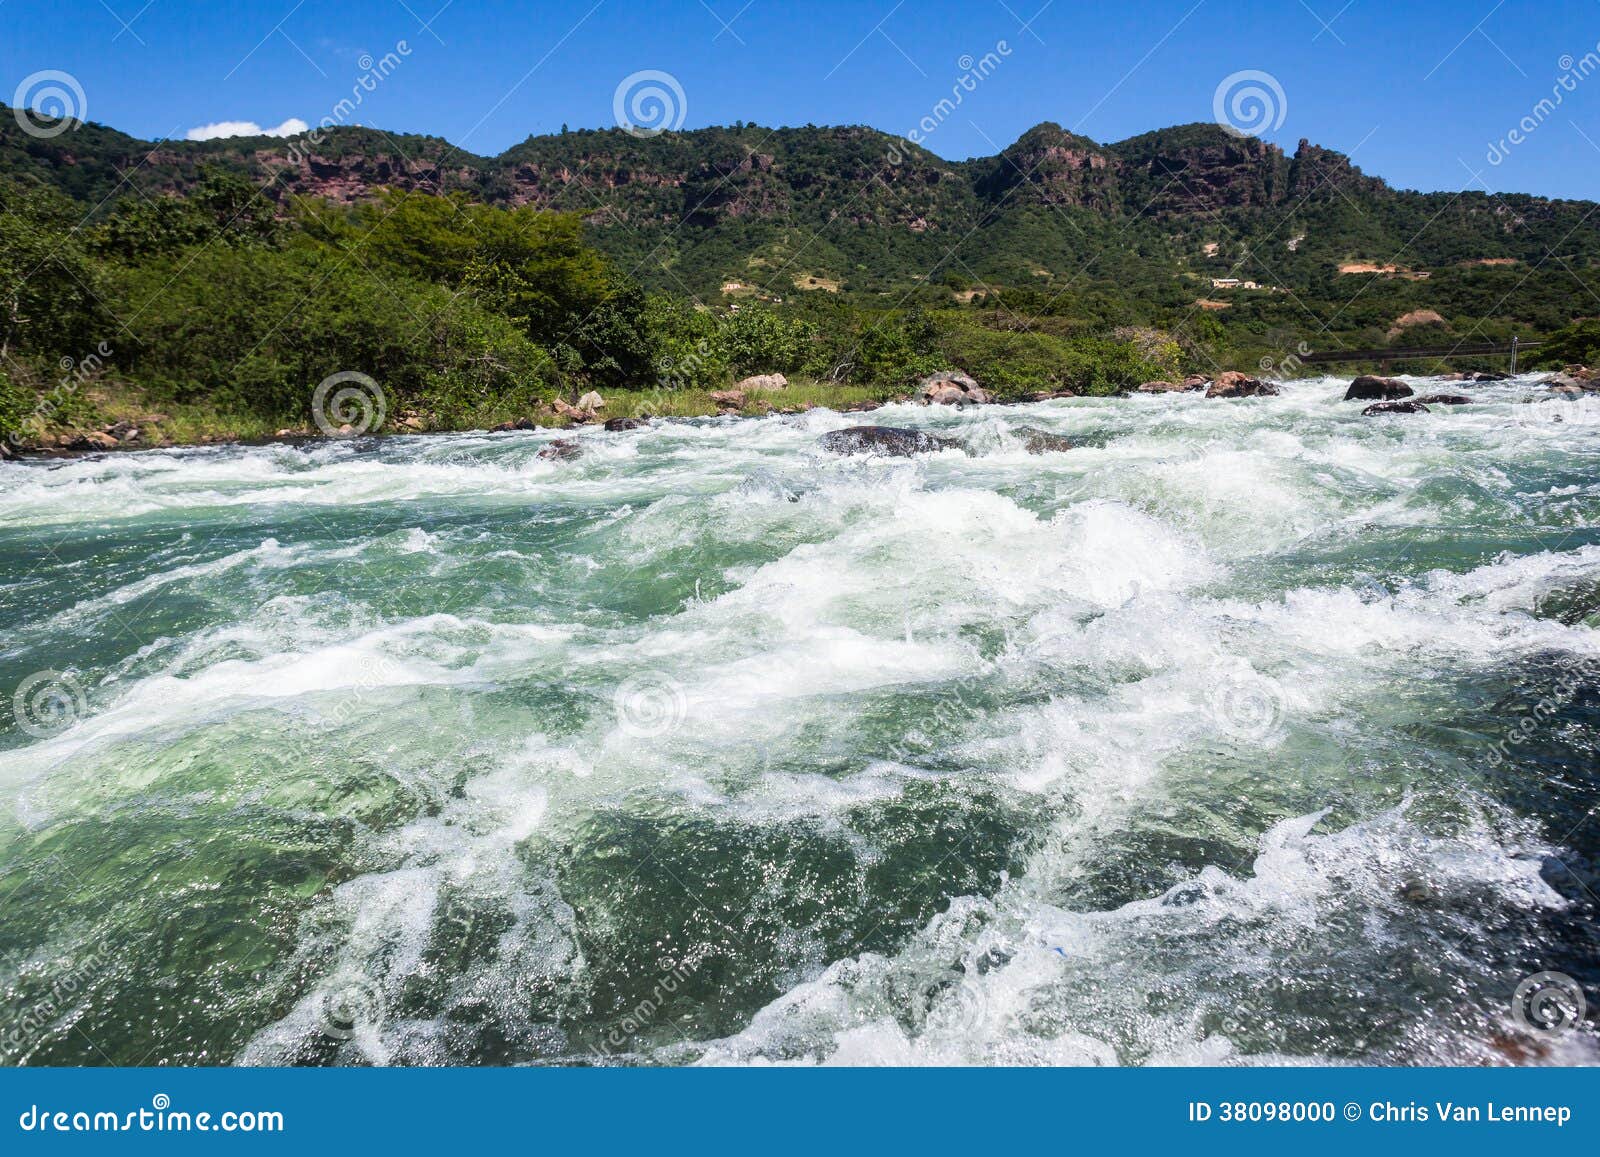 river water rapids valley